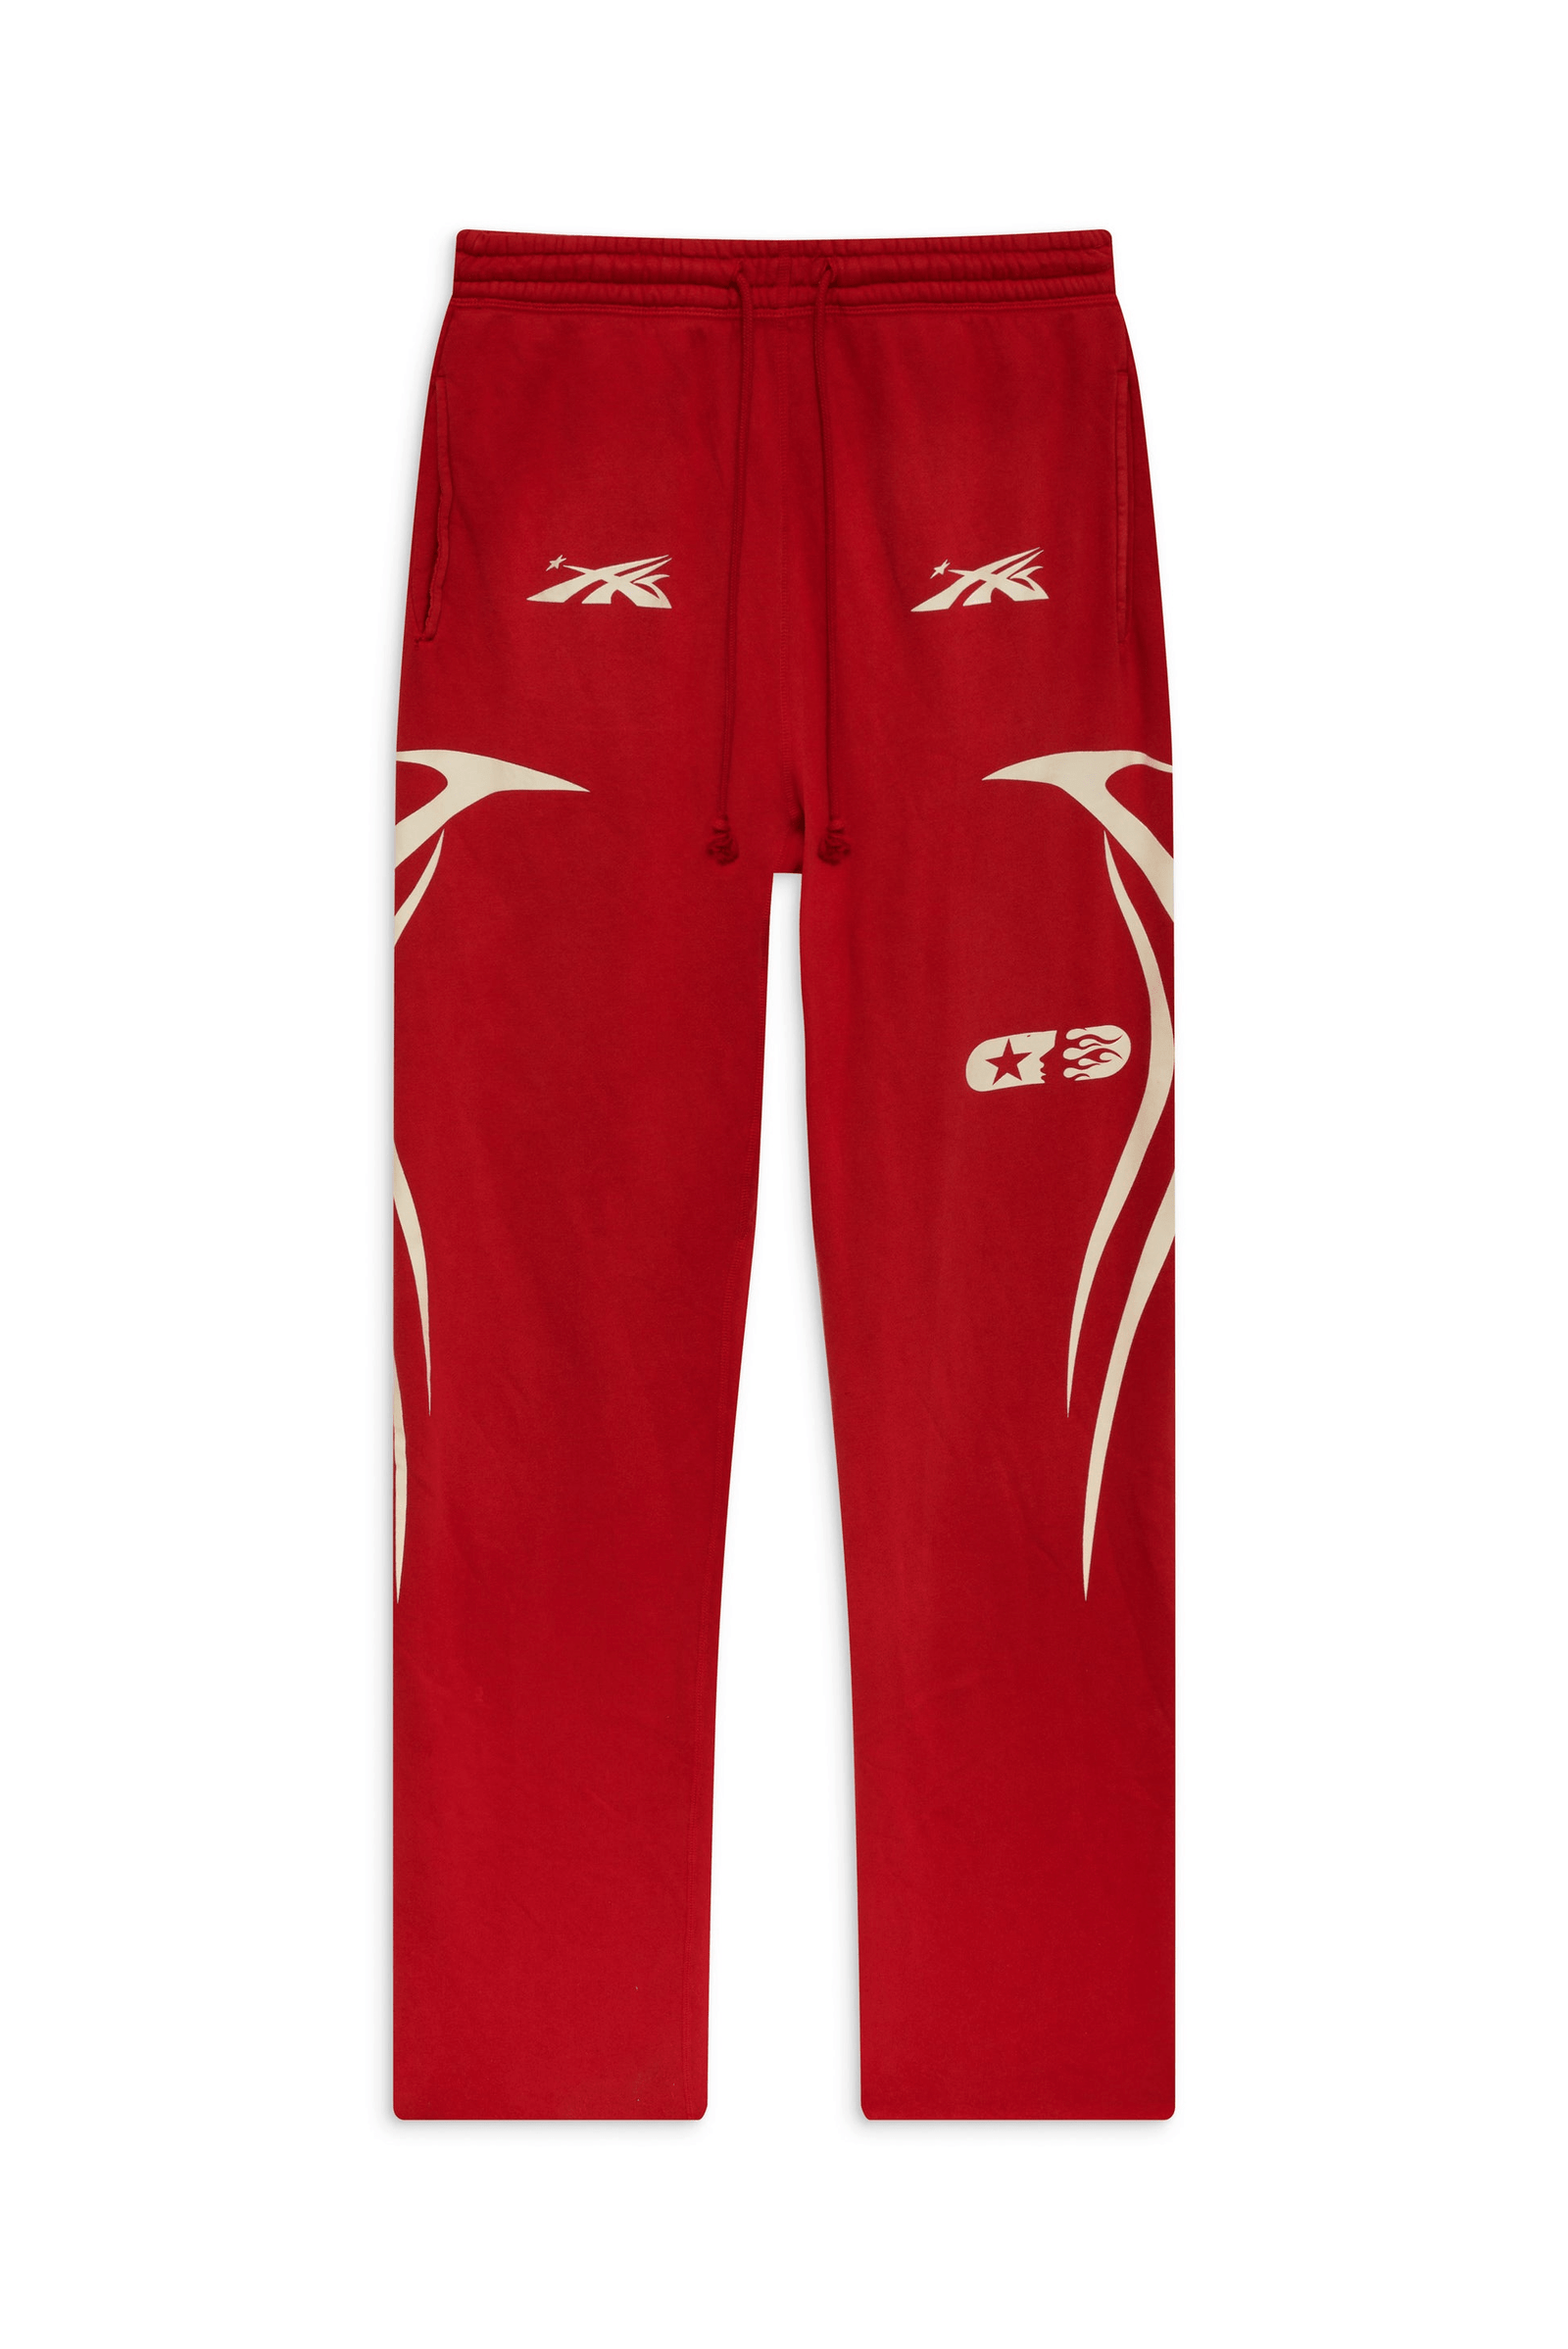 Hellstar Sports Sweatpants Red